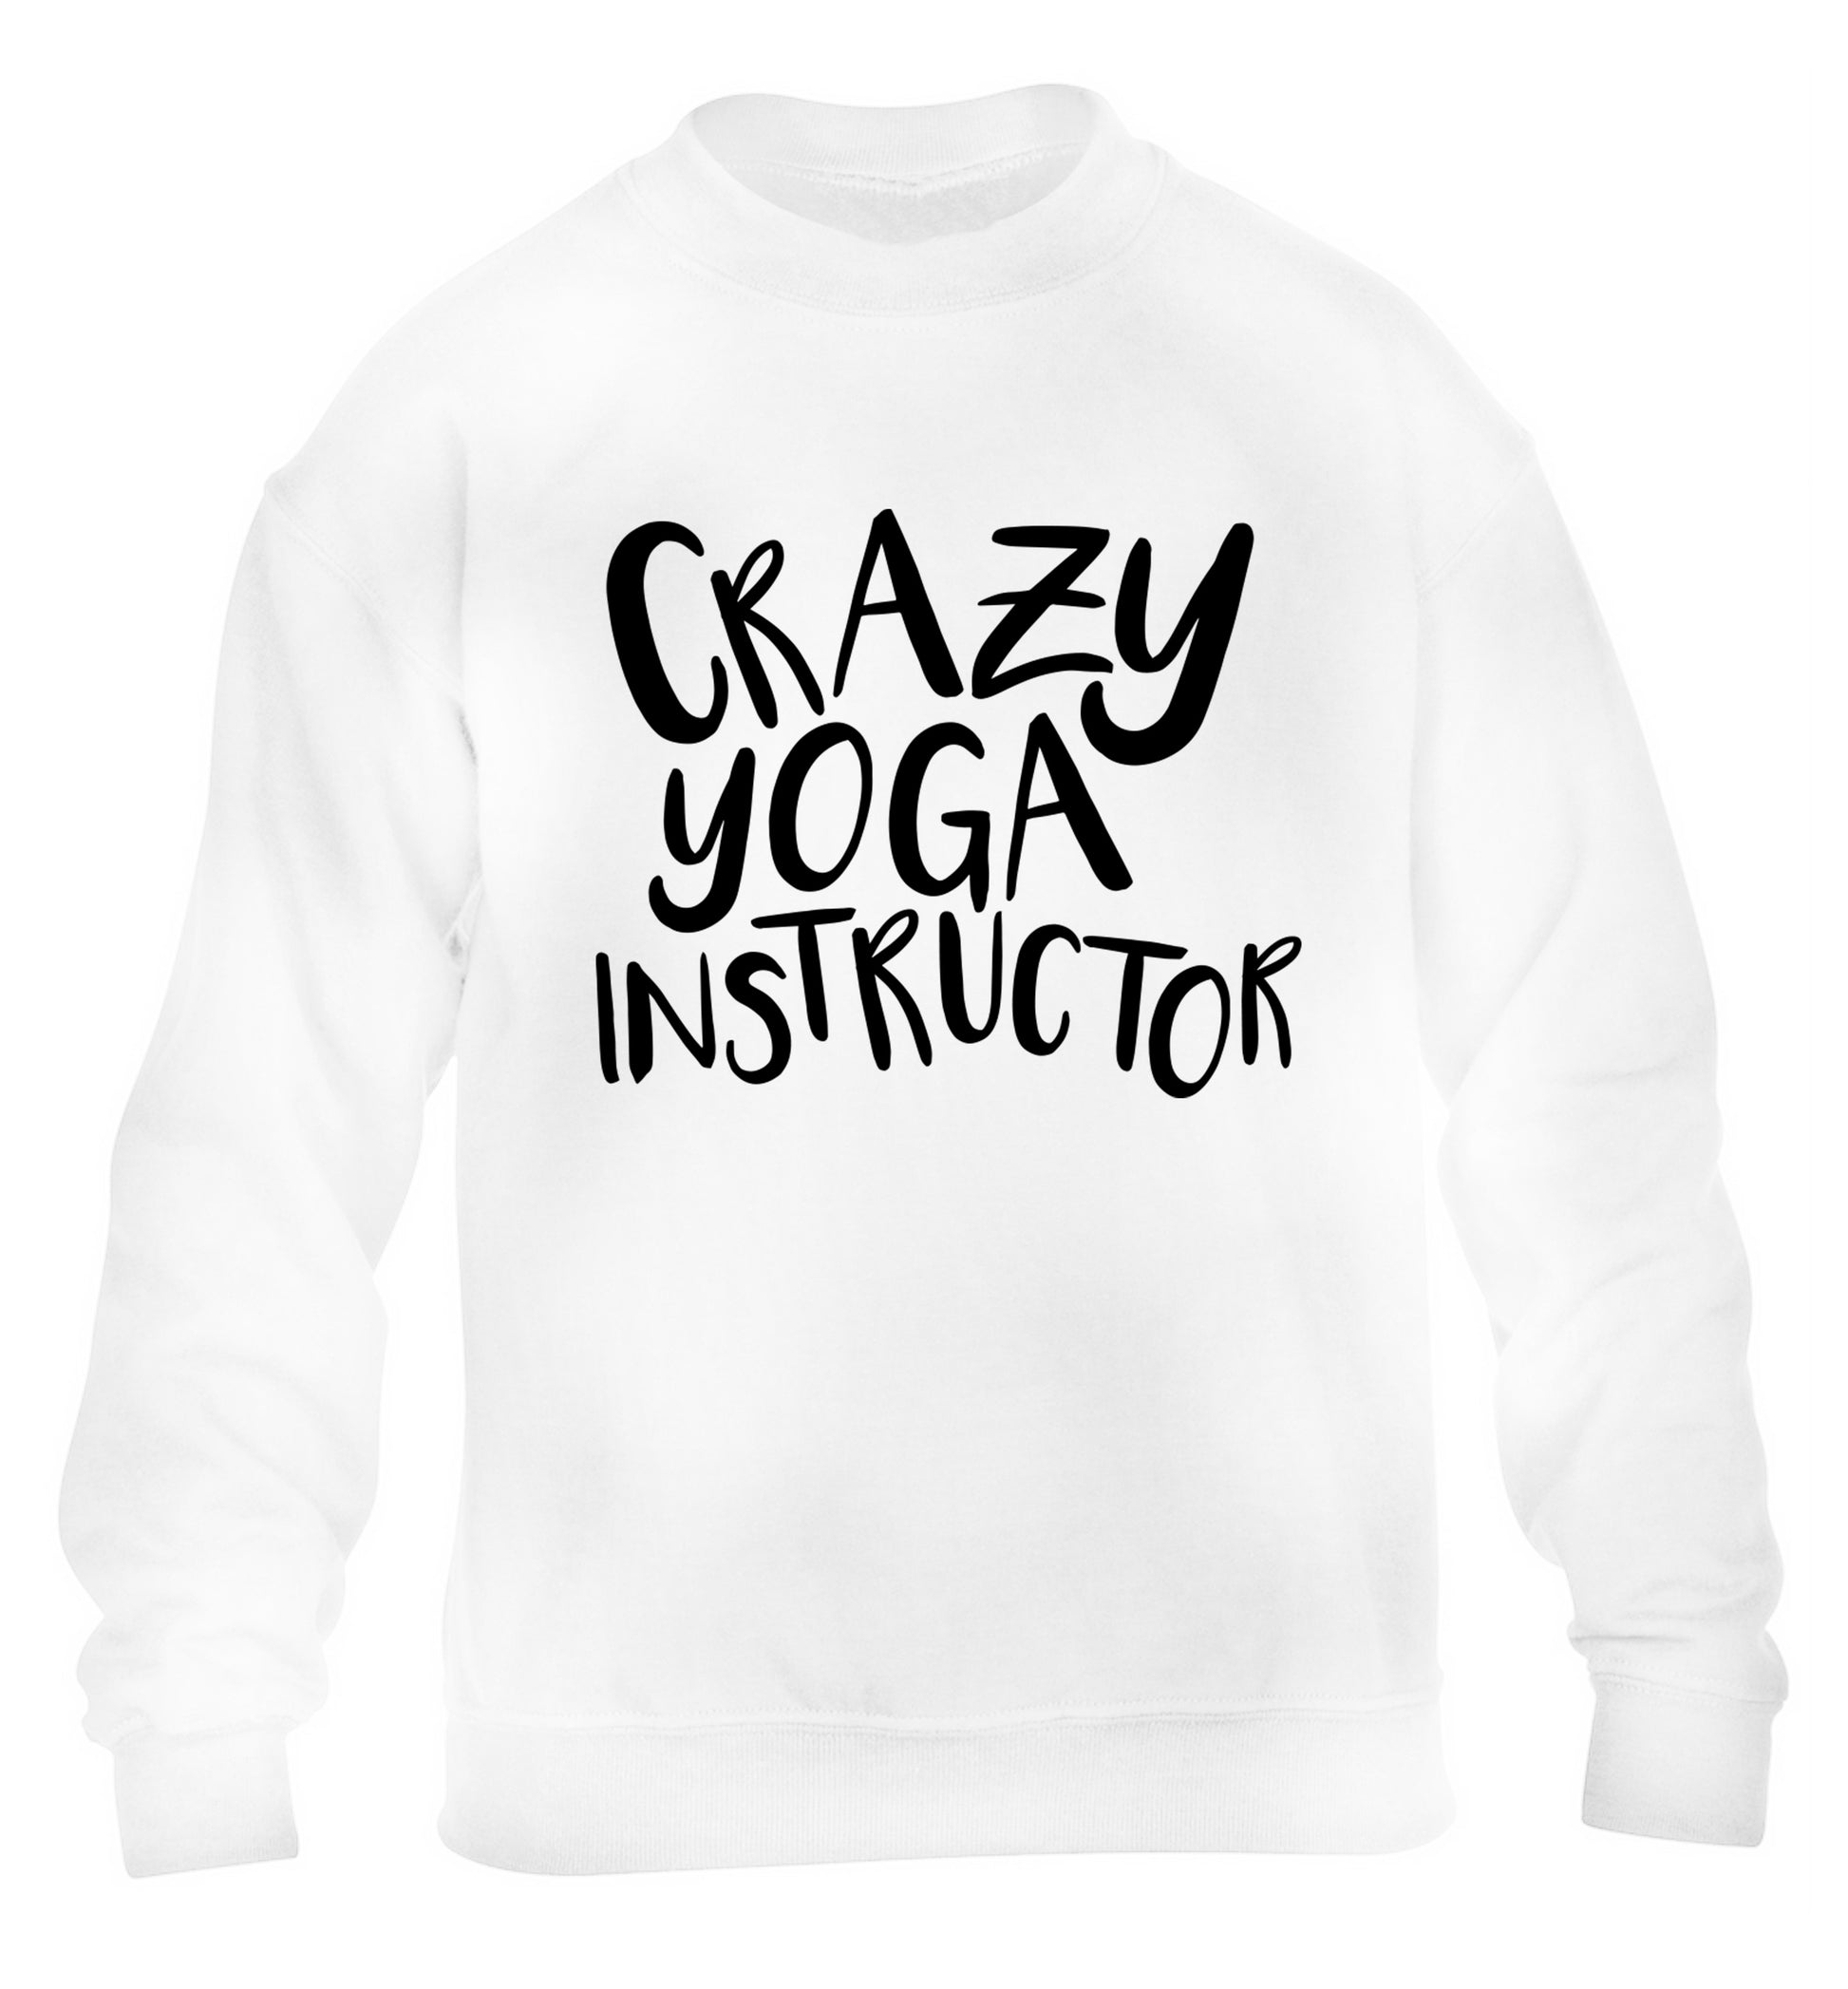 Crazy yoga instructor children's white sweater 12-13 Years